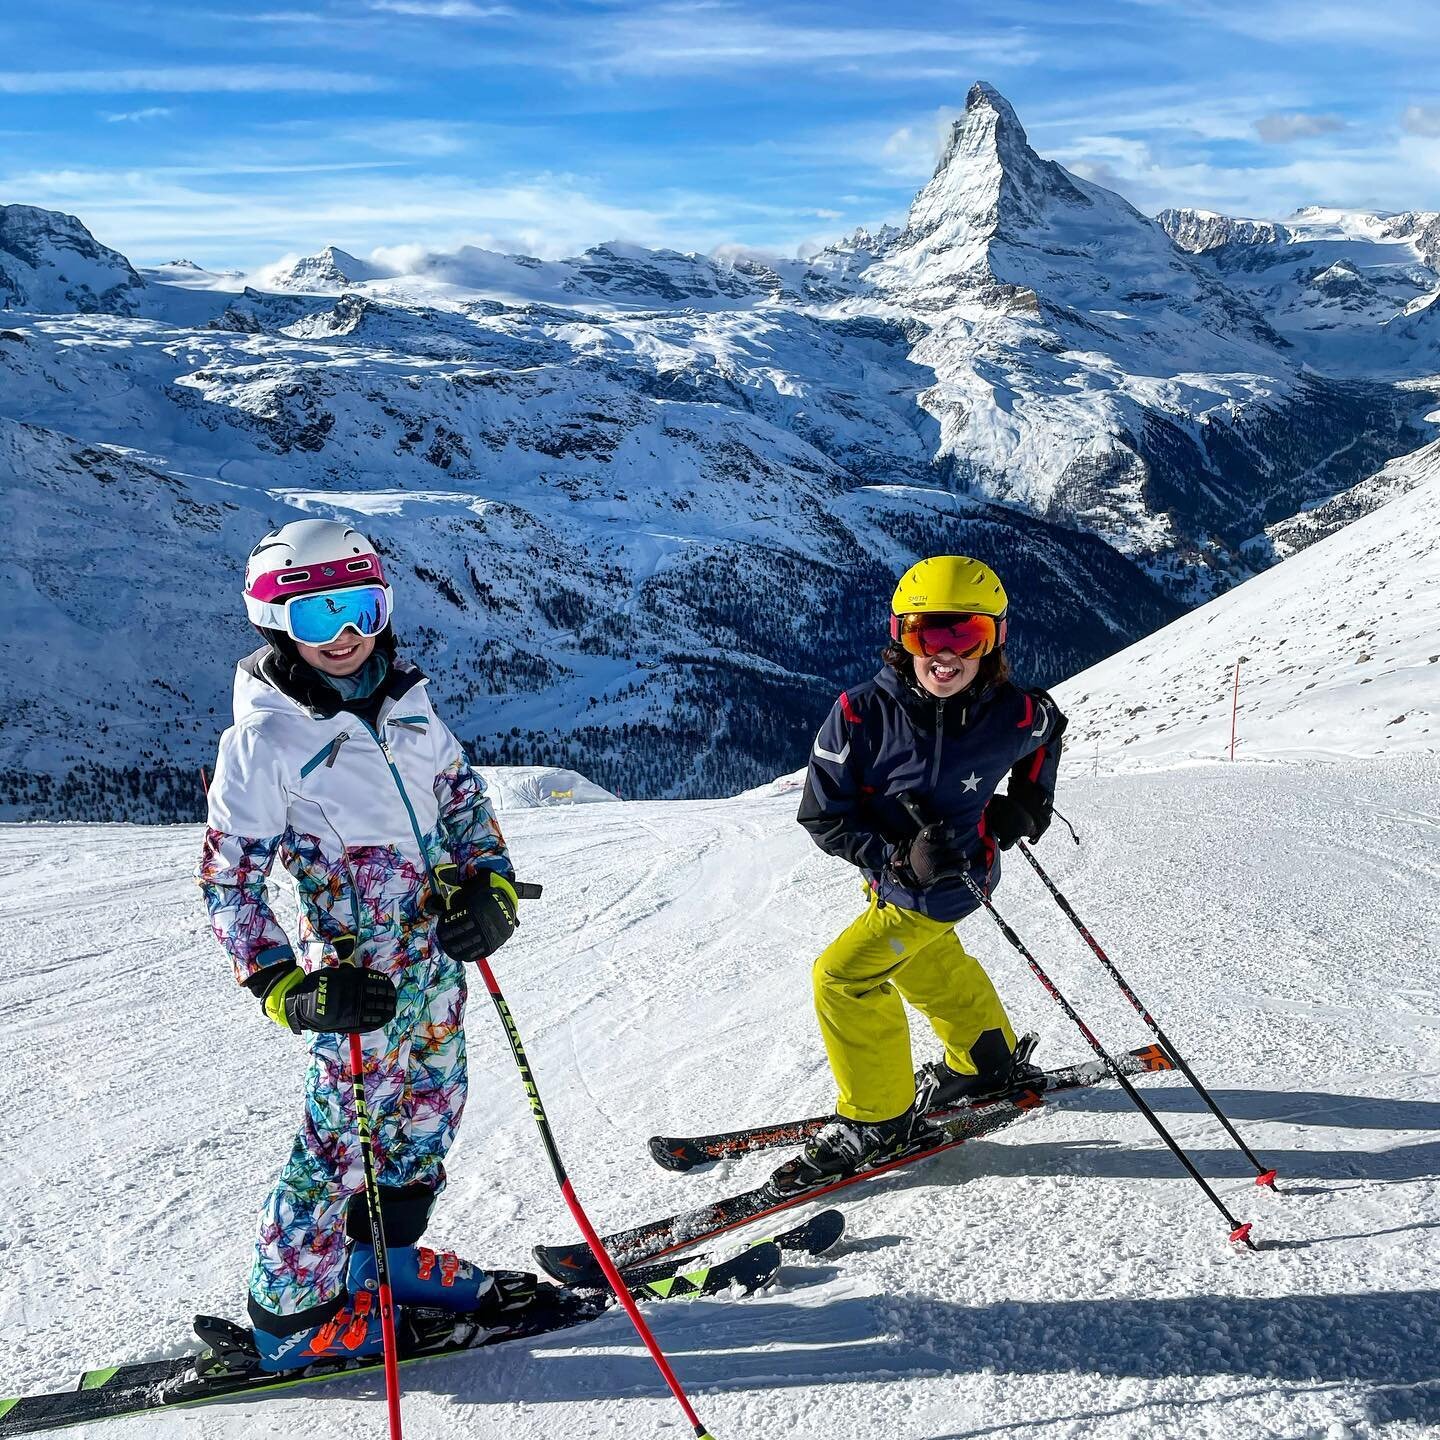 Days like these ❤️❤️❤️❤️
.
.
.
.
#ski #skischool #skiing #skifast #skiinstructor #skiinstructorlife #skiingday #skiingislife #skiingfun #snow #snowy #winter #winterwonderland #winterfun #winterholiday #zermatt #switzerland #matterhorn #campzermatt #w